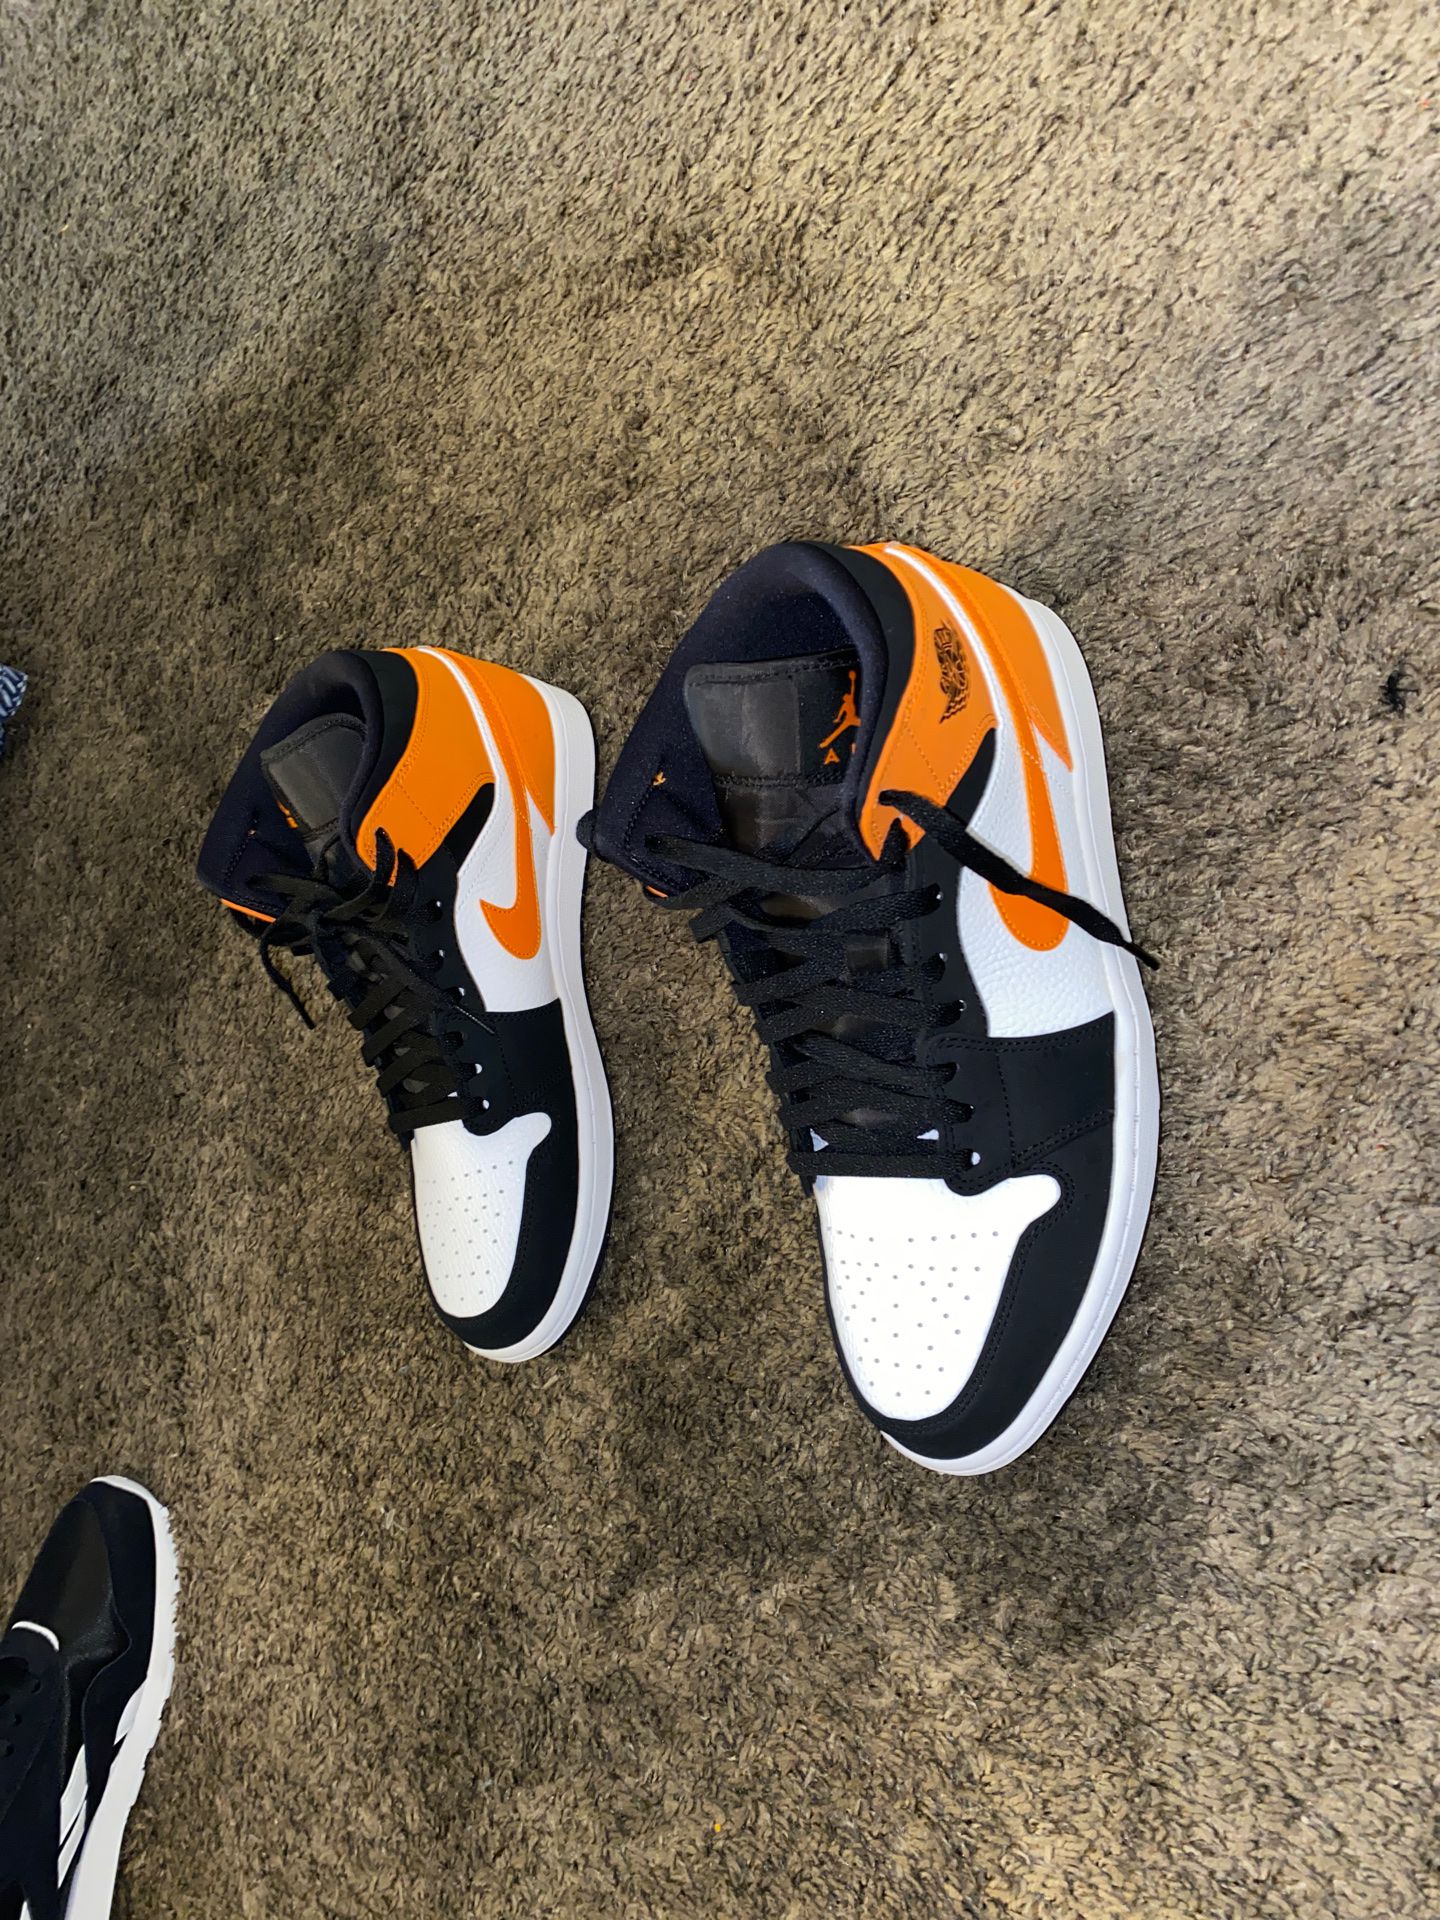 Air Jordan 1 Size 12